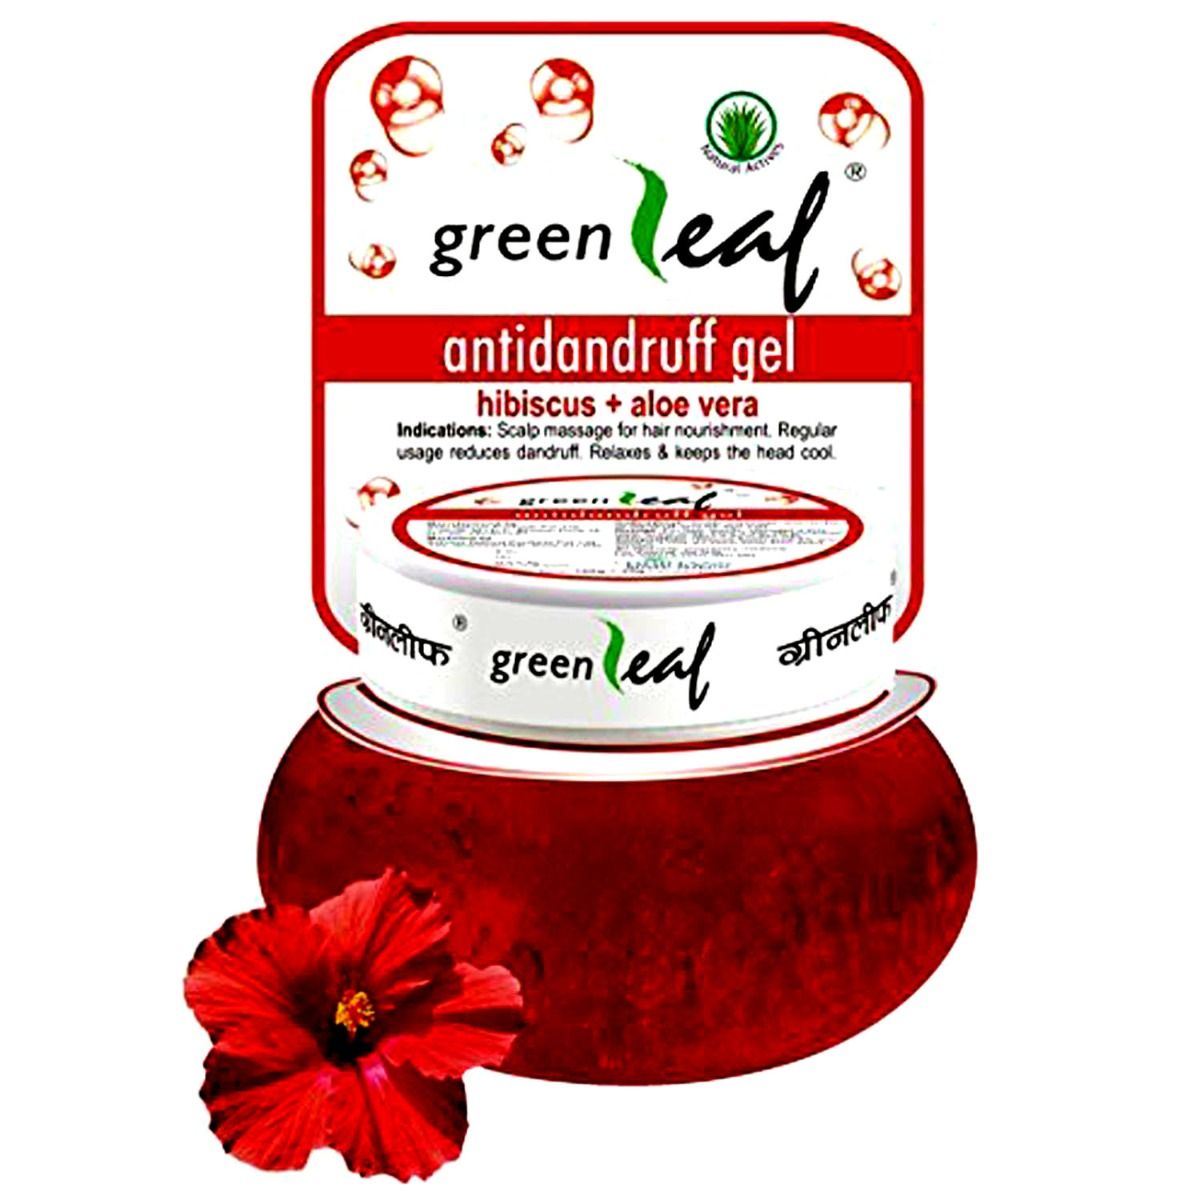 Green Leaf Anti-Dandruff Hibiscus + Aloe Vera Hair Gel, 120 gm Price, Uses,  Side Effects, Composition - Apollo Pharmacy